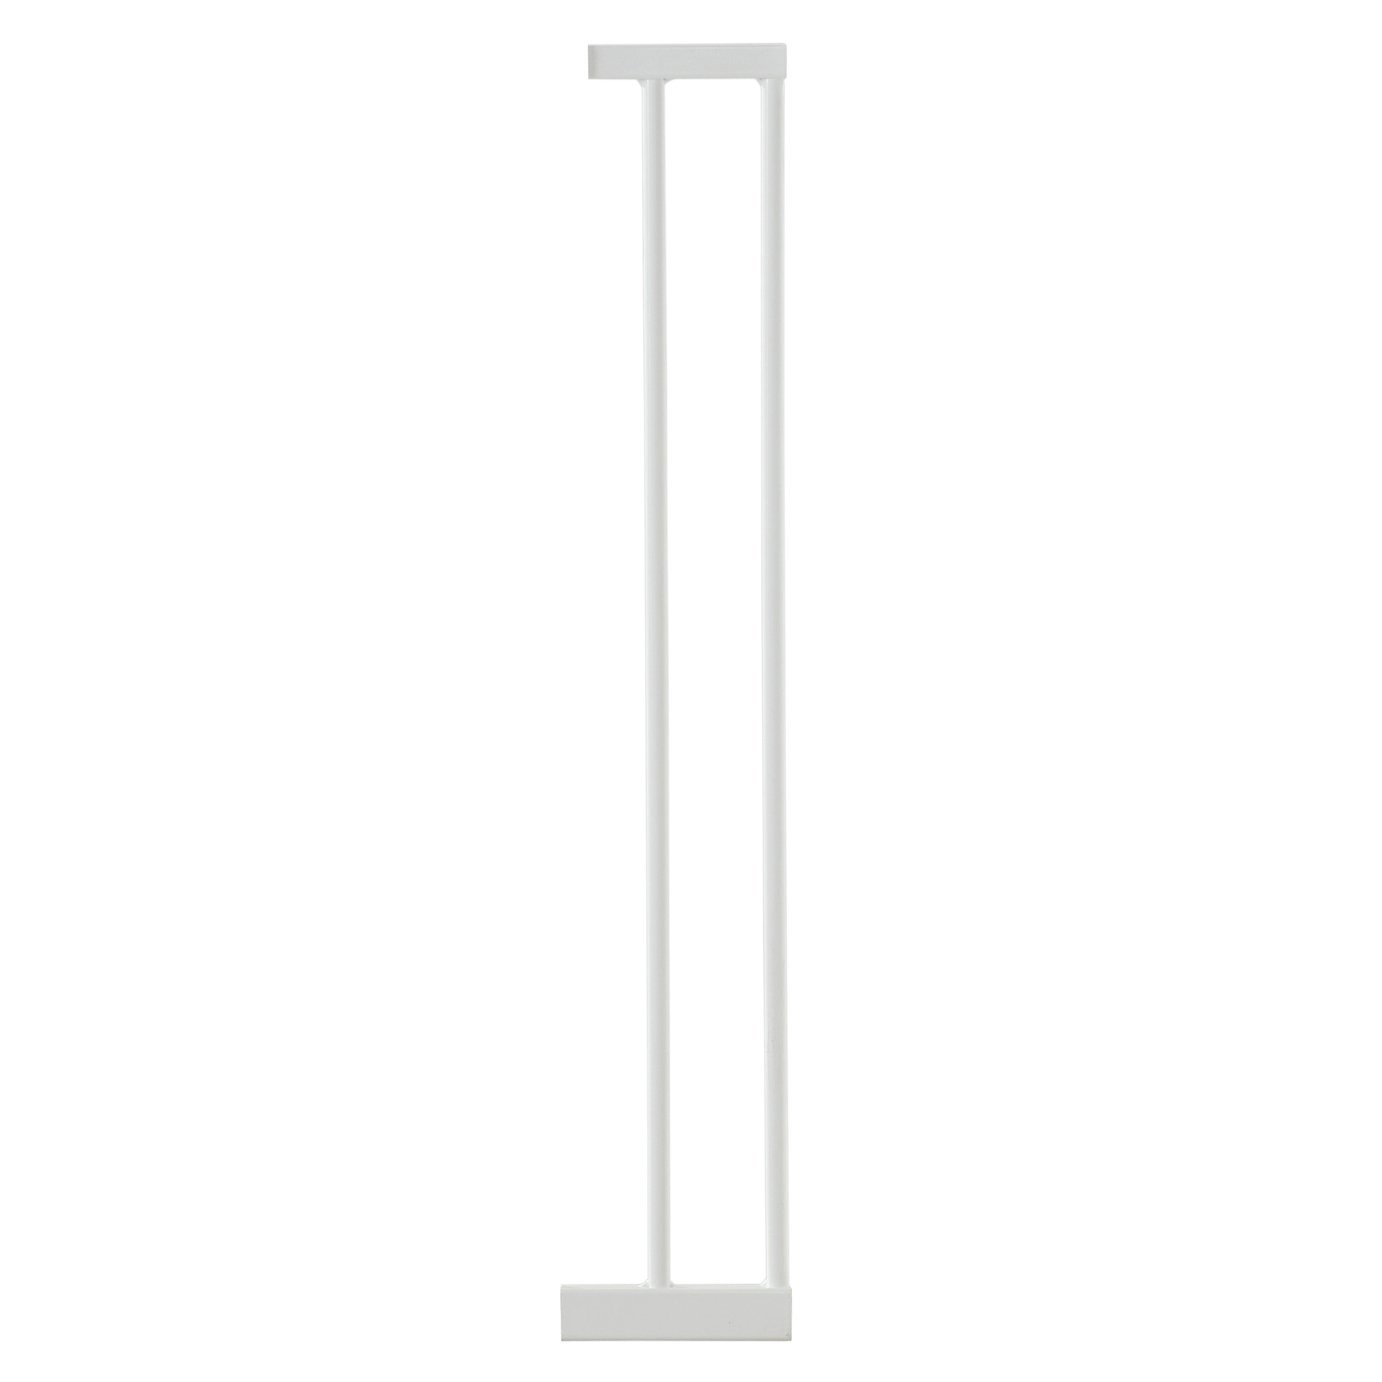 Munchkin Universal Easy White Extension Επέκταση για Πόρτα Ασφαλείας 1 Τεμάχιο - 14 cm